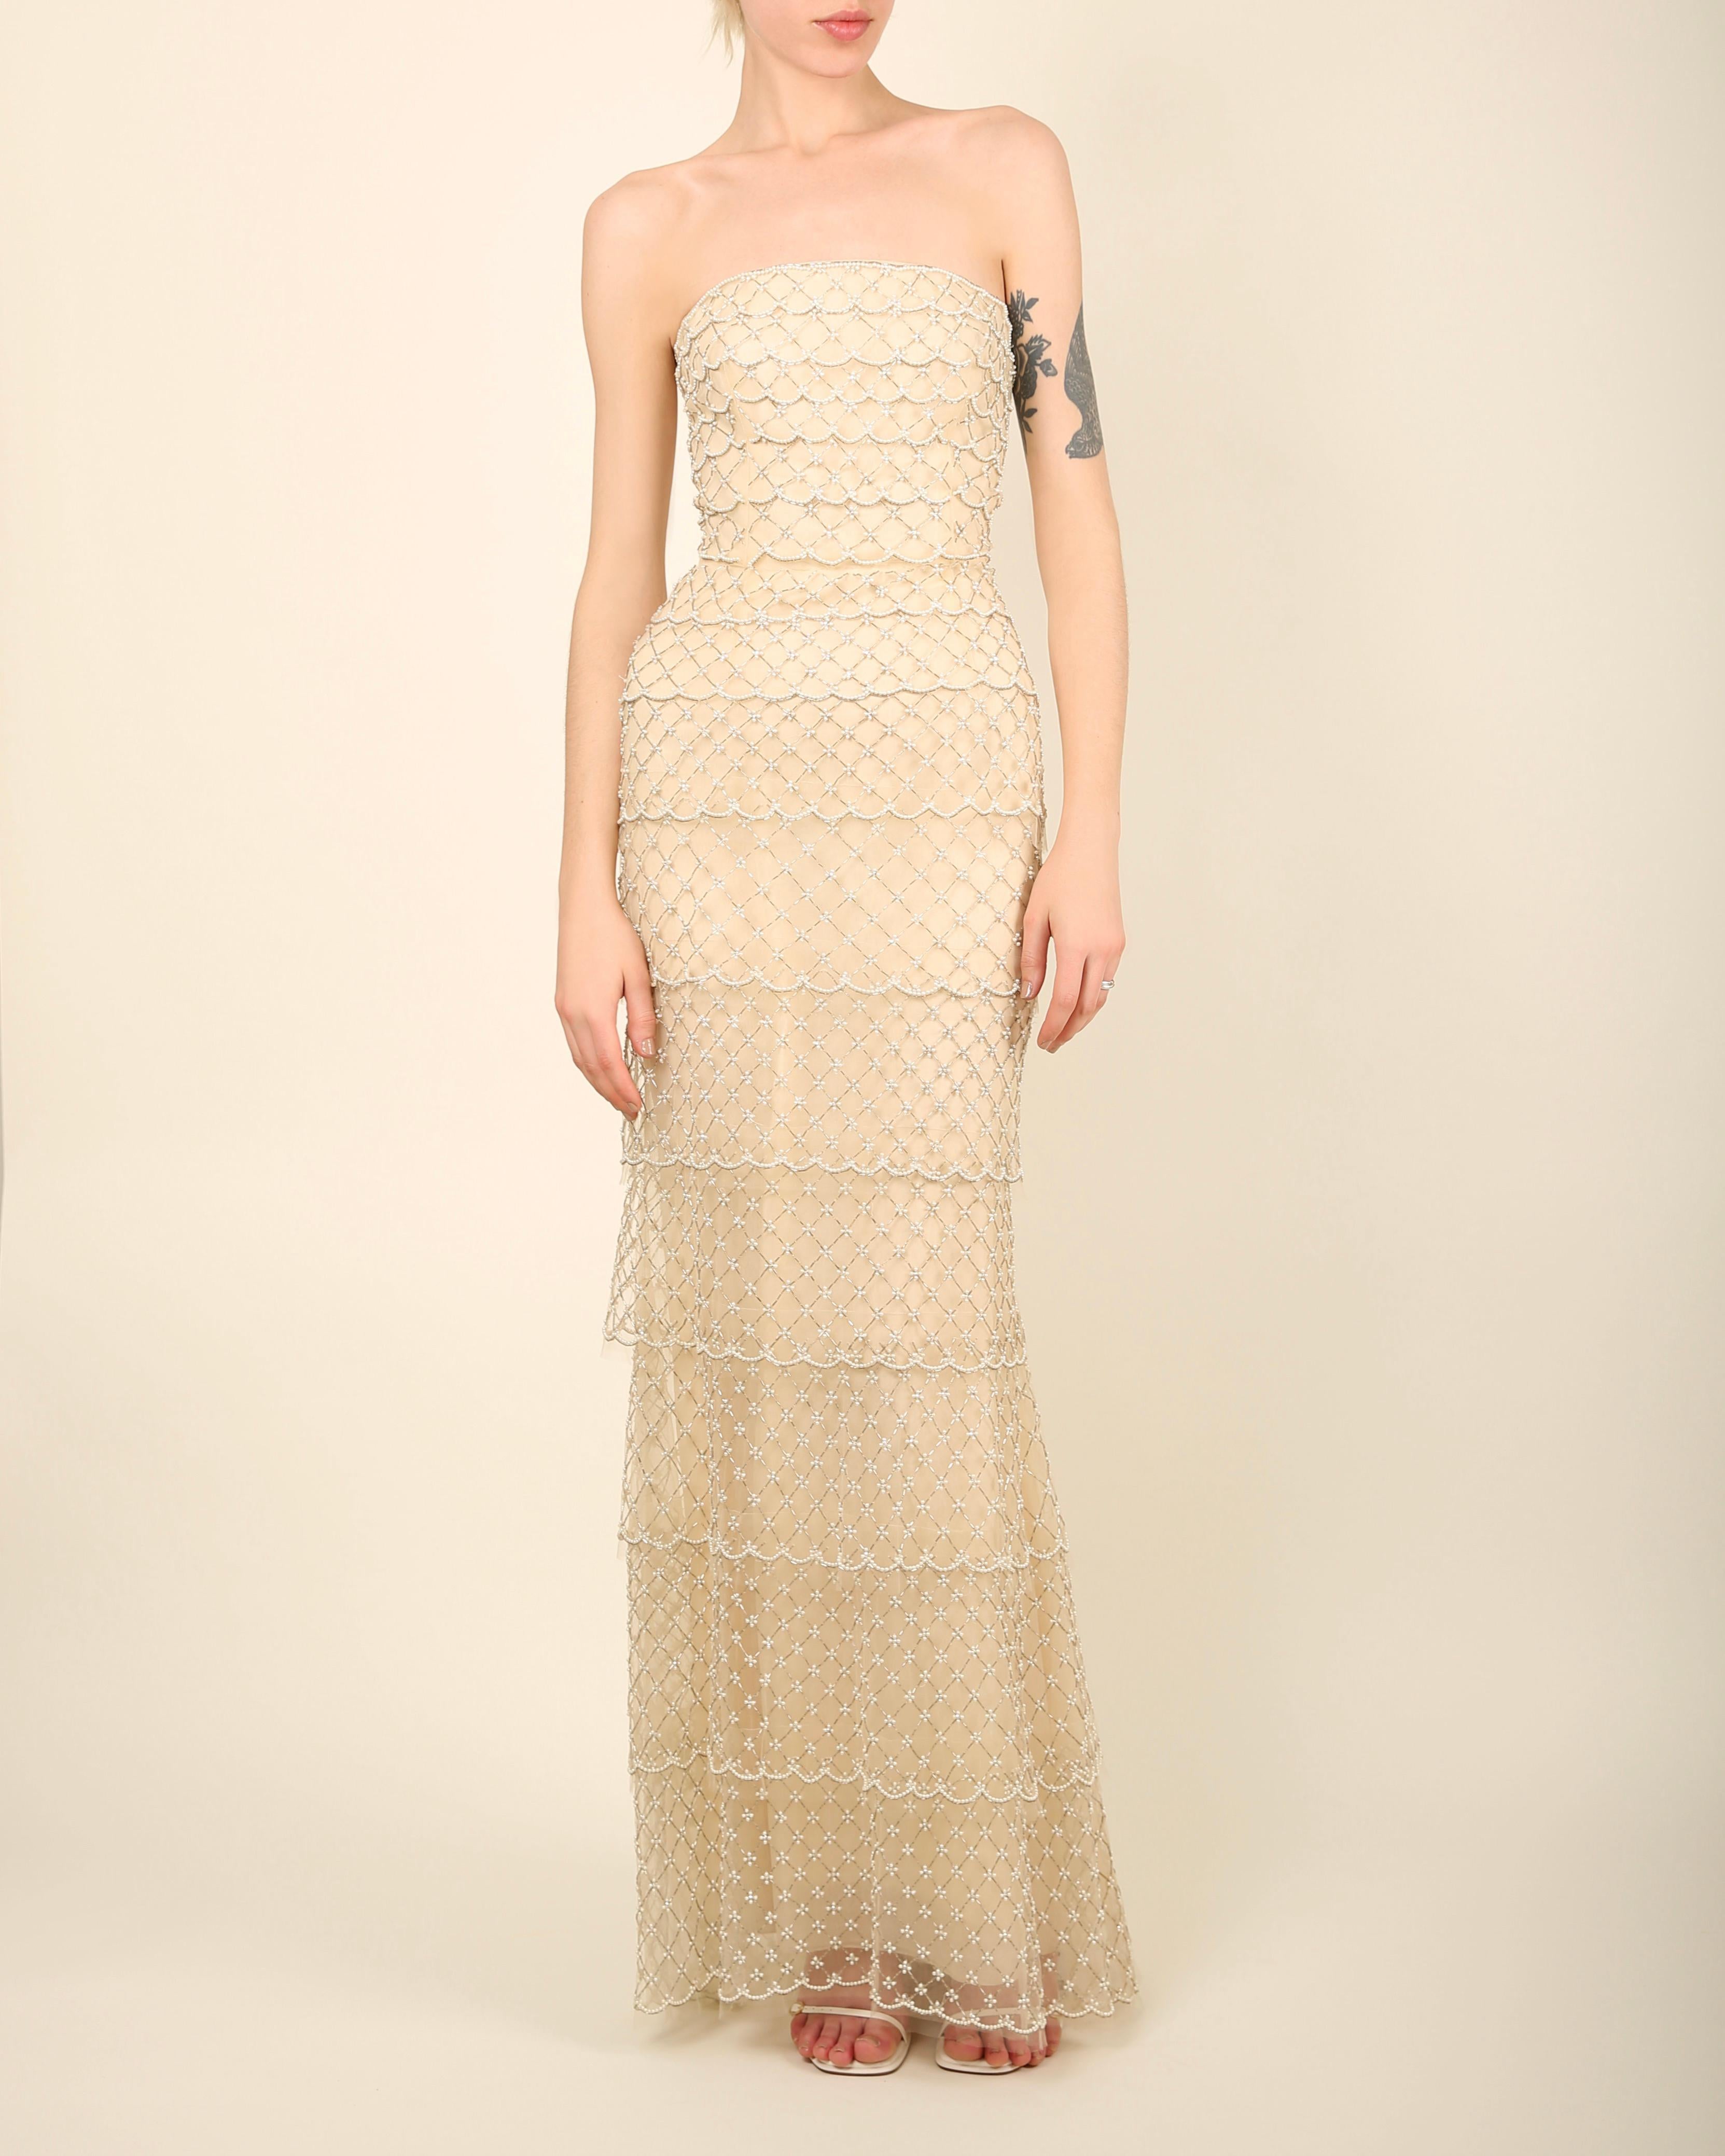 Women's Oscar de la Renta S/S 2014 strapless tiered sheer mesh pearl wedding dress gown For Sale